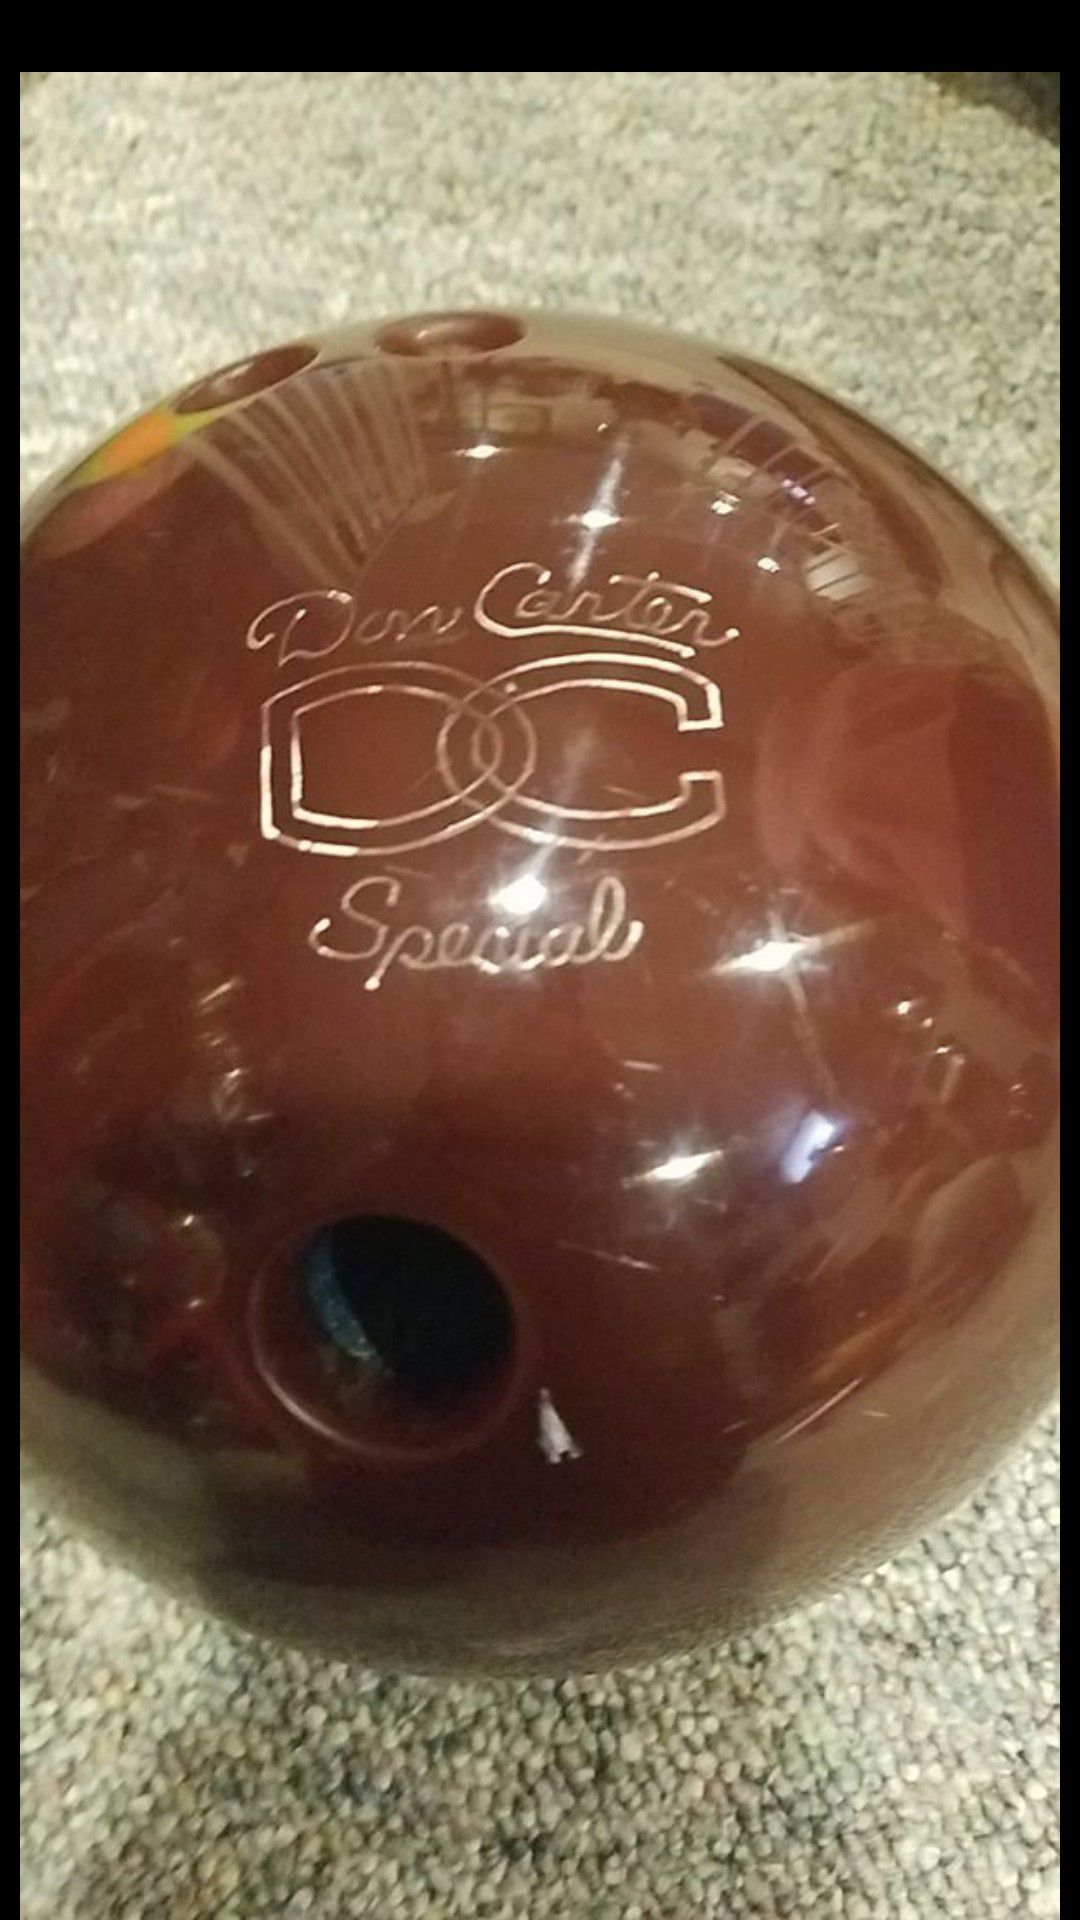 Ebonite Don Carter special bowling ball